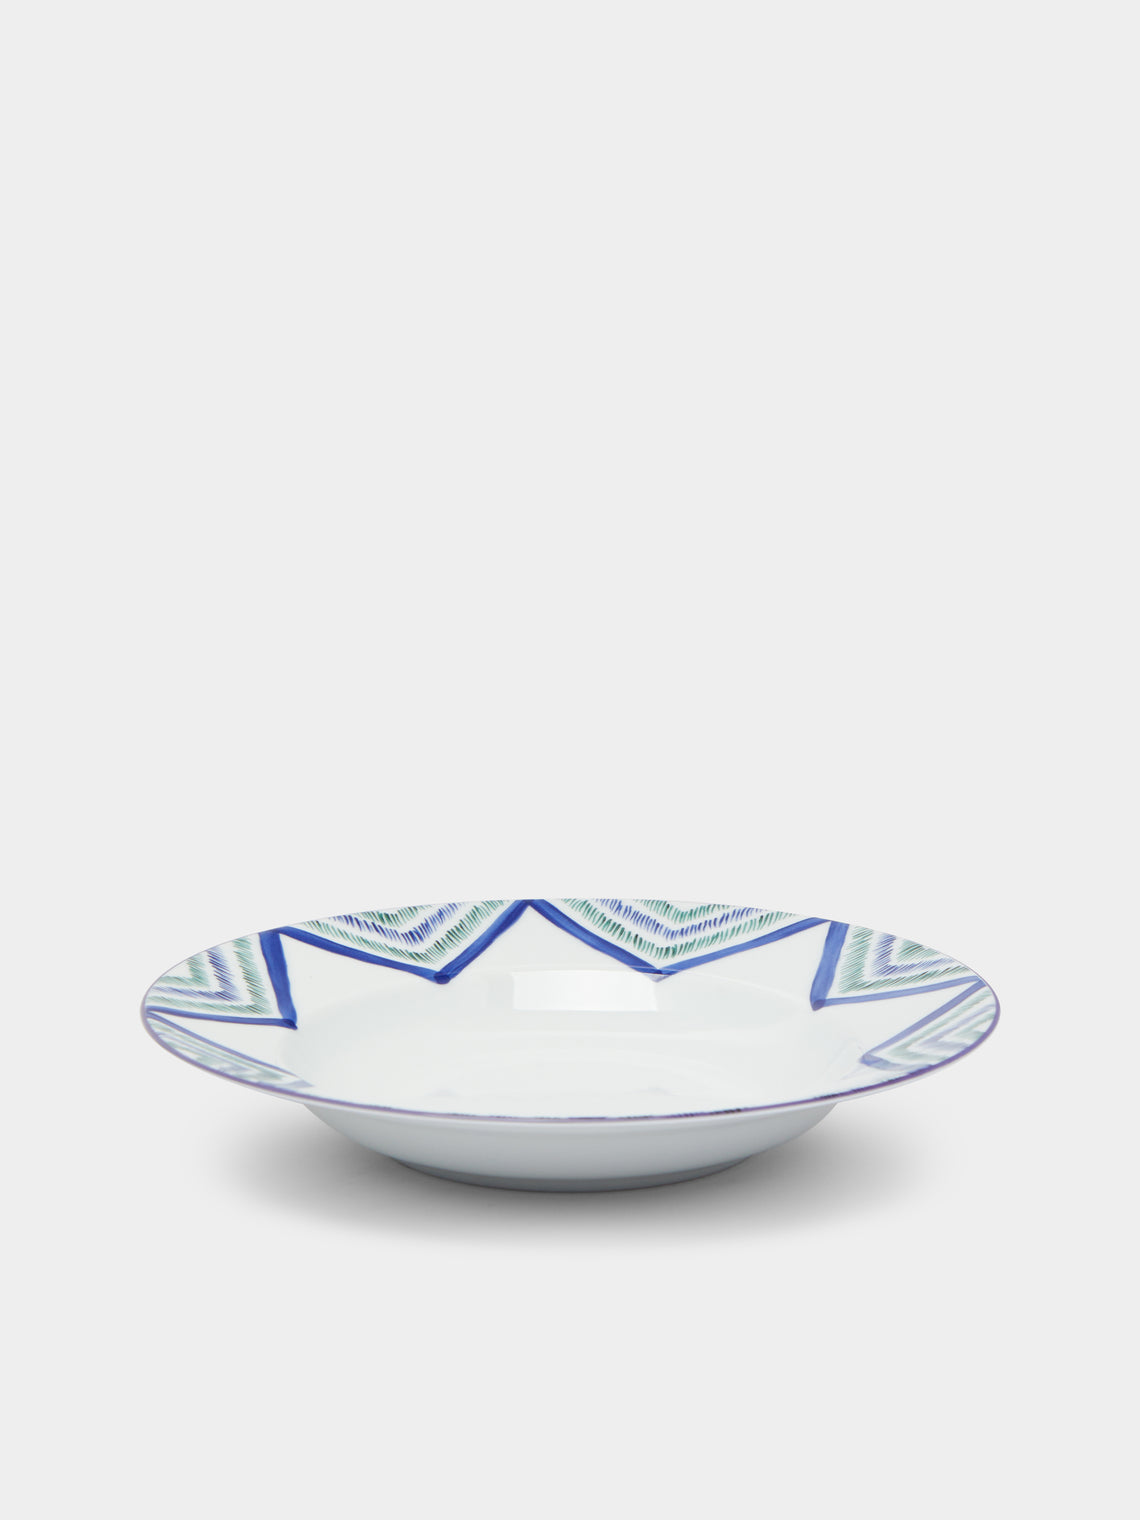 Molecot - Mallorca Porcelain Bowls (Set of 4) -  - ABASK - 